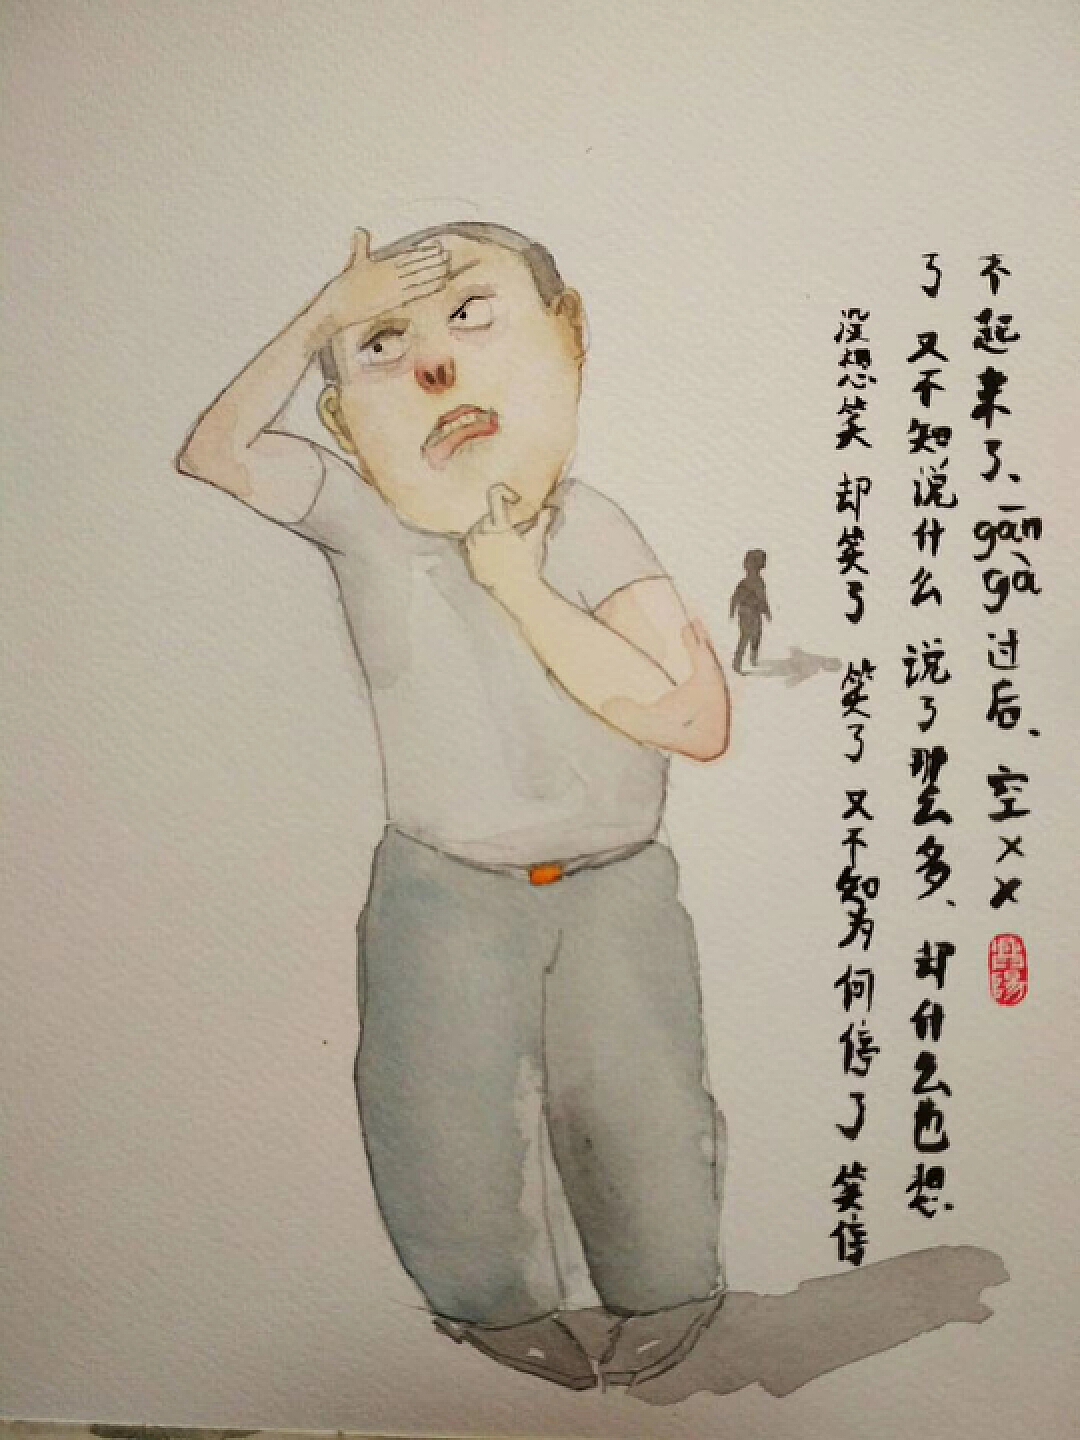 尴尬！重庆一女子，用“梦瑶”两个字作画，辛苦画了7天，0人观看。_哔哩哔哩 (゜-゜)つロ 干杯~-bilibili